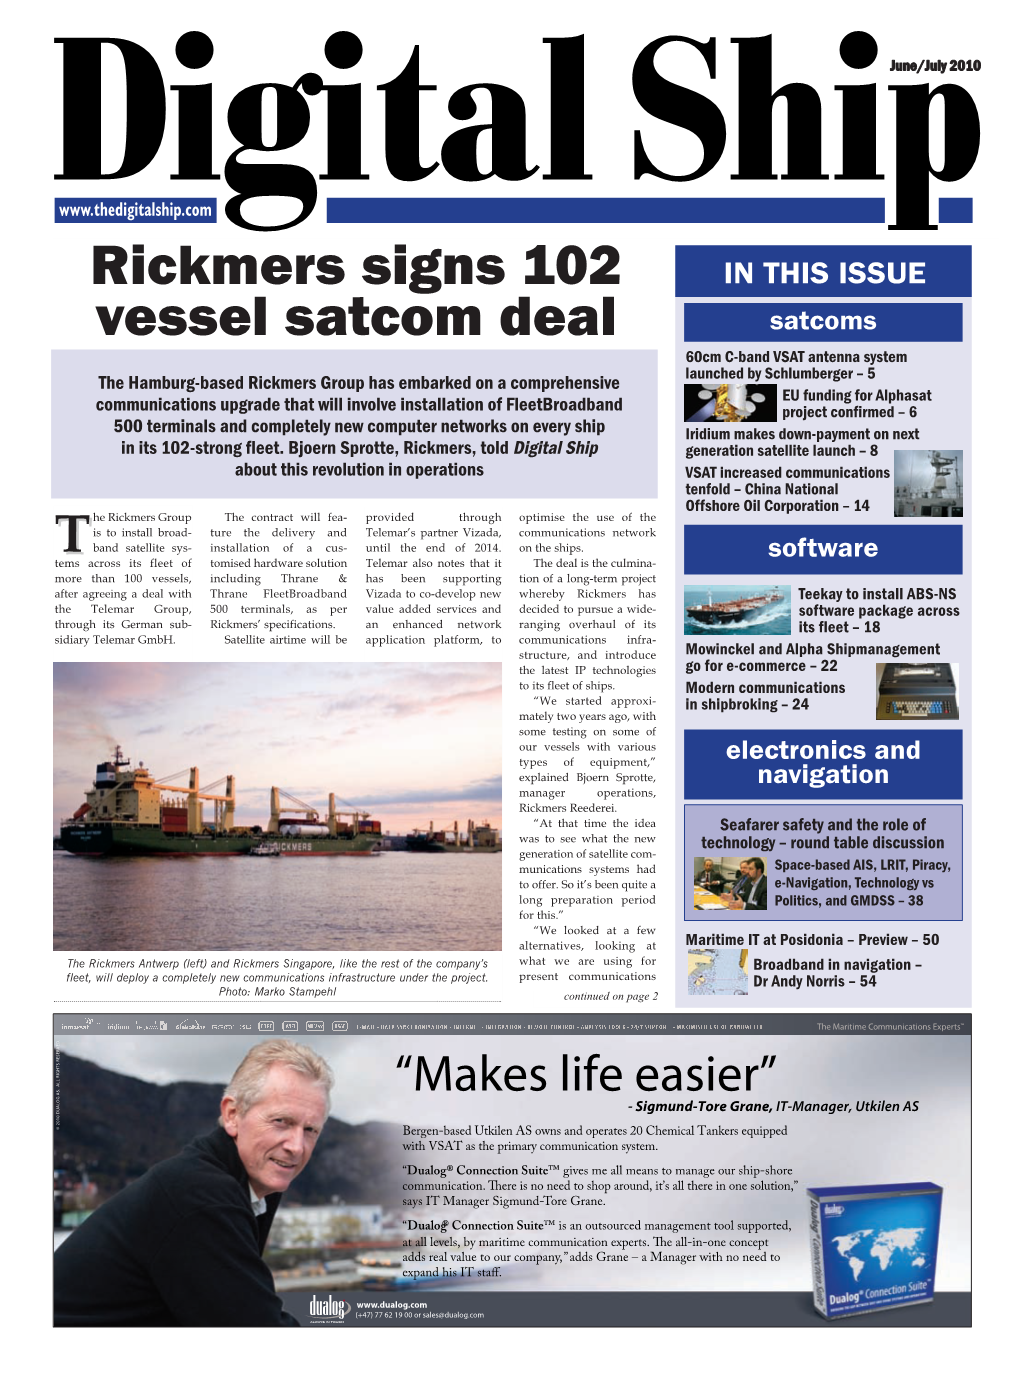 Rickmers Signs 102 Vessel Satcom Deal